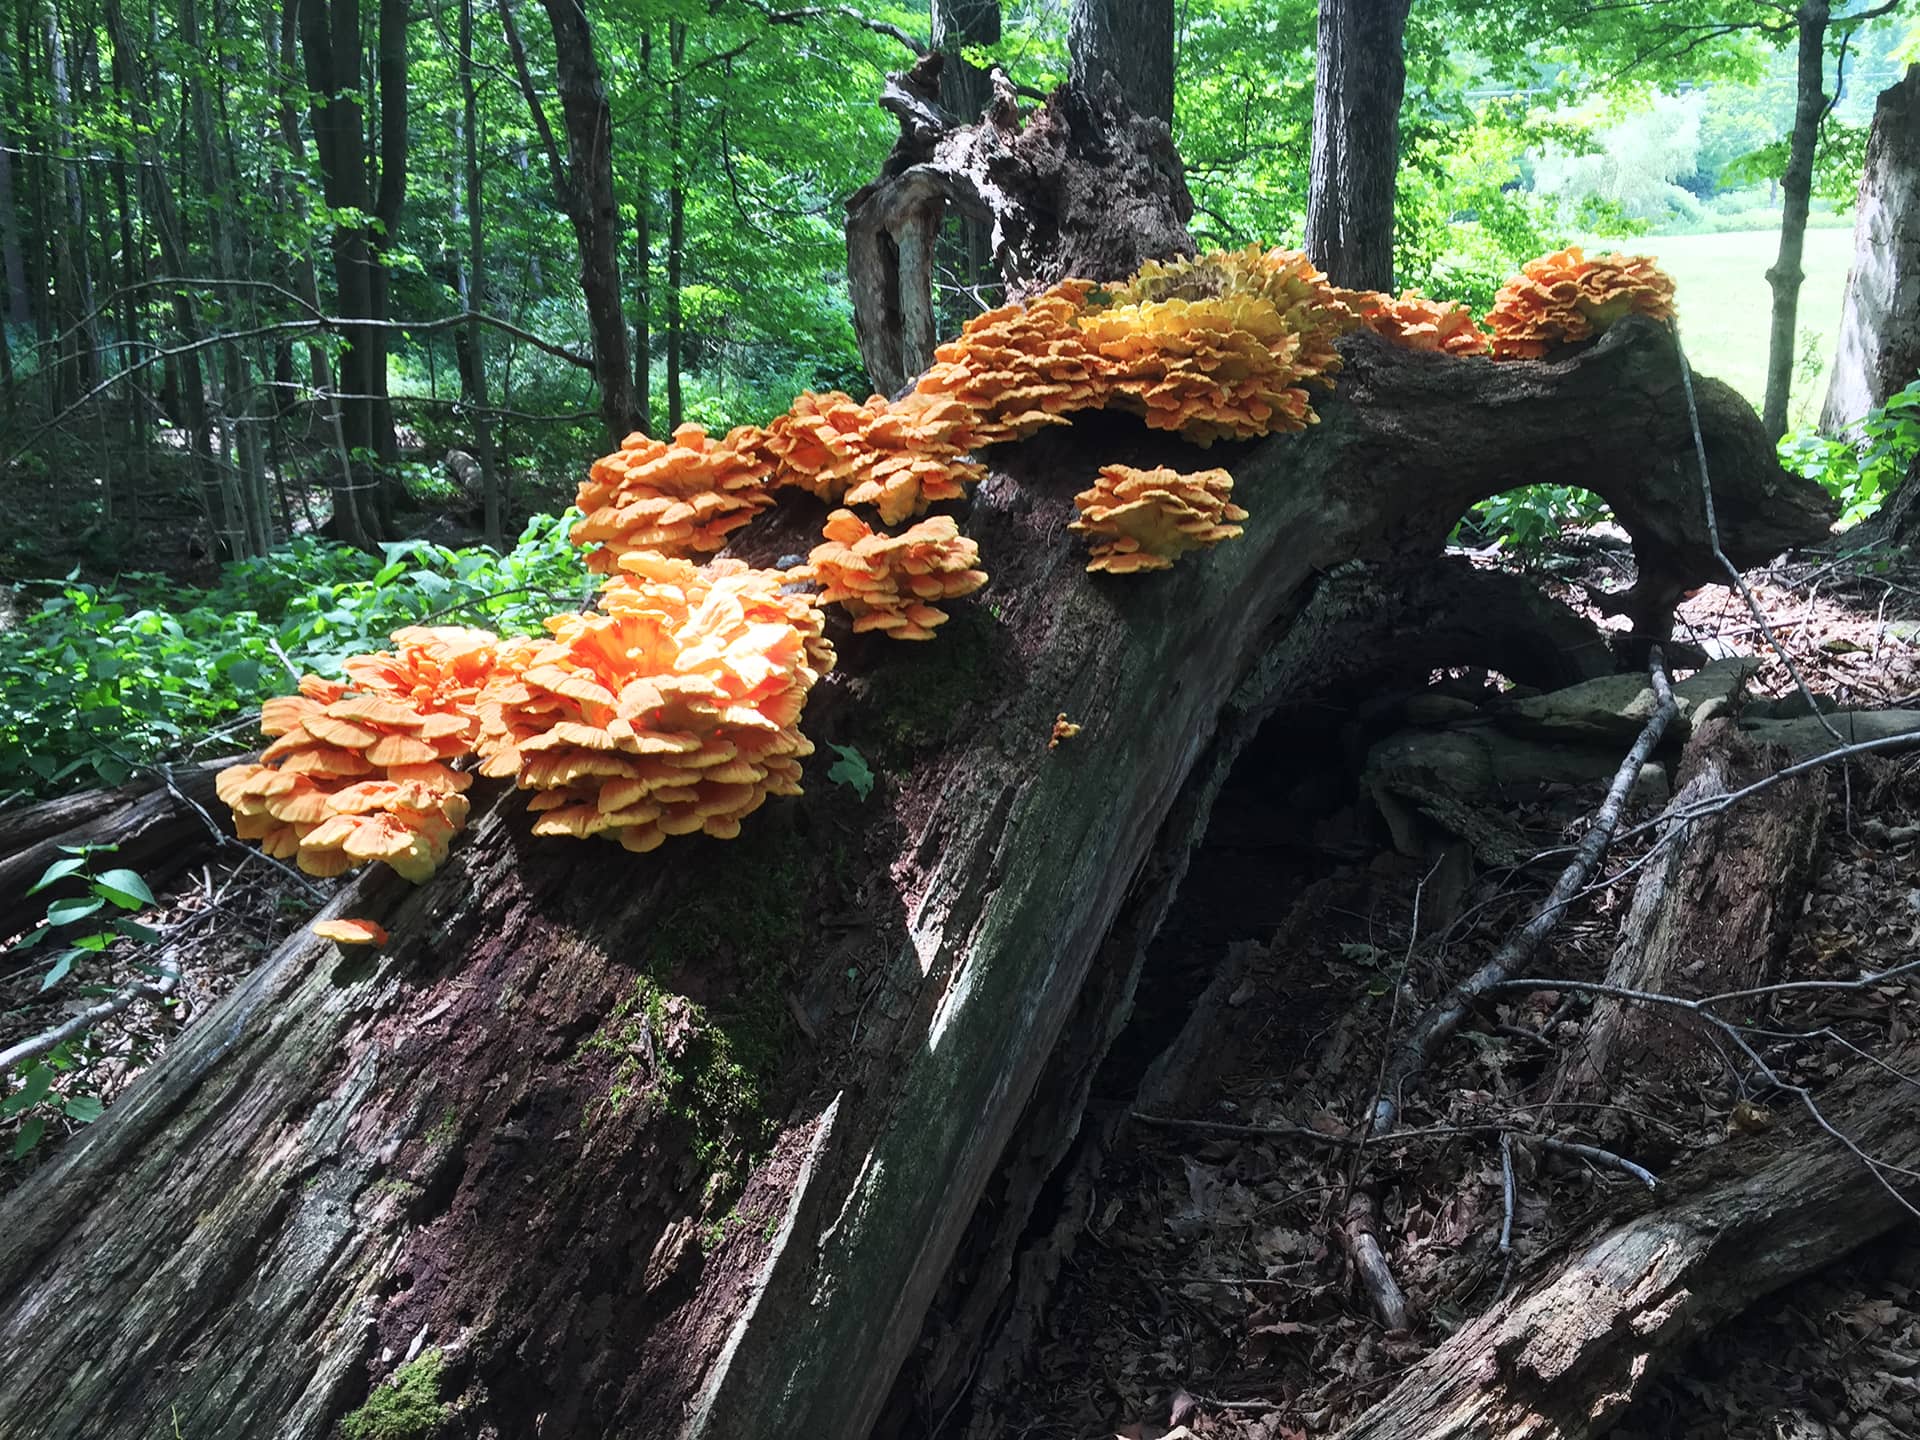 Chicken of the woods mushrooms on a fallen log